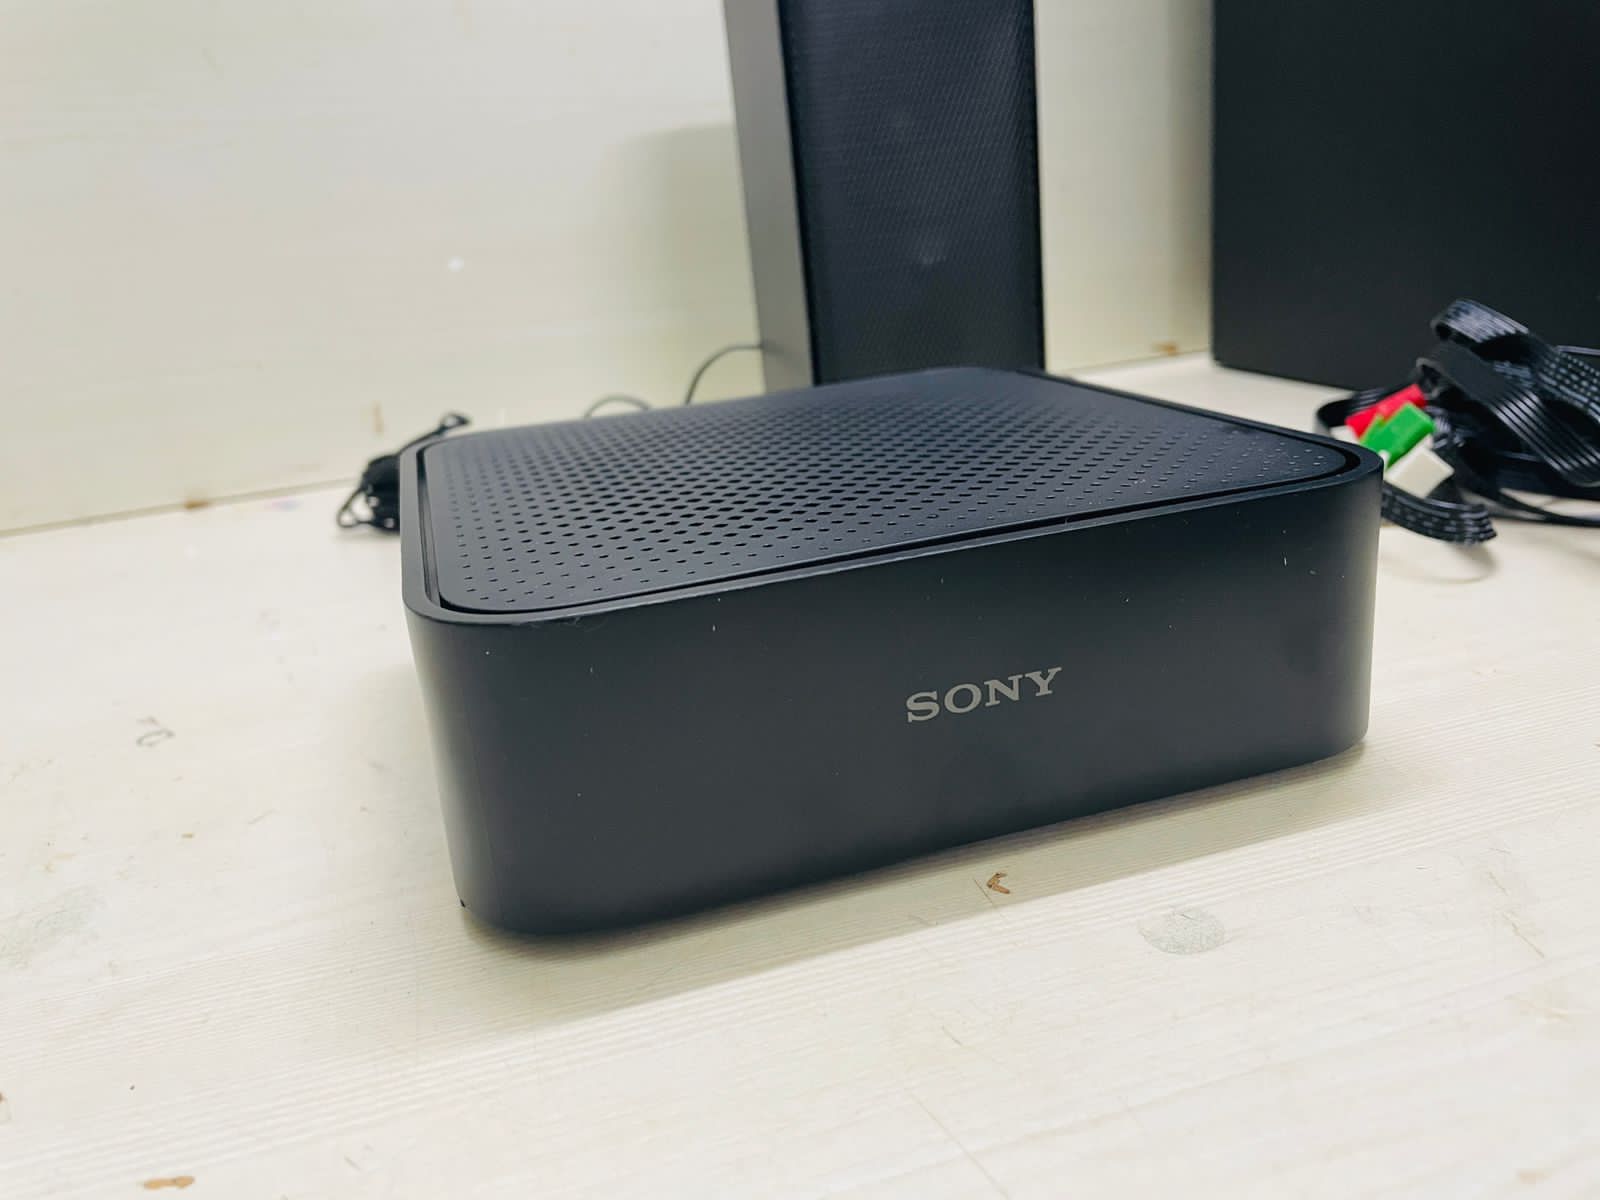 HT-S40R Home Cinema 5.1ch Soundbar with Wireless Rear Speakers